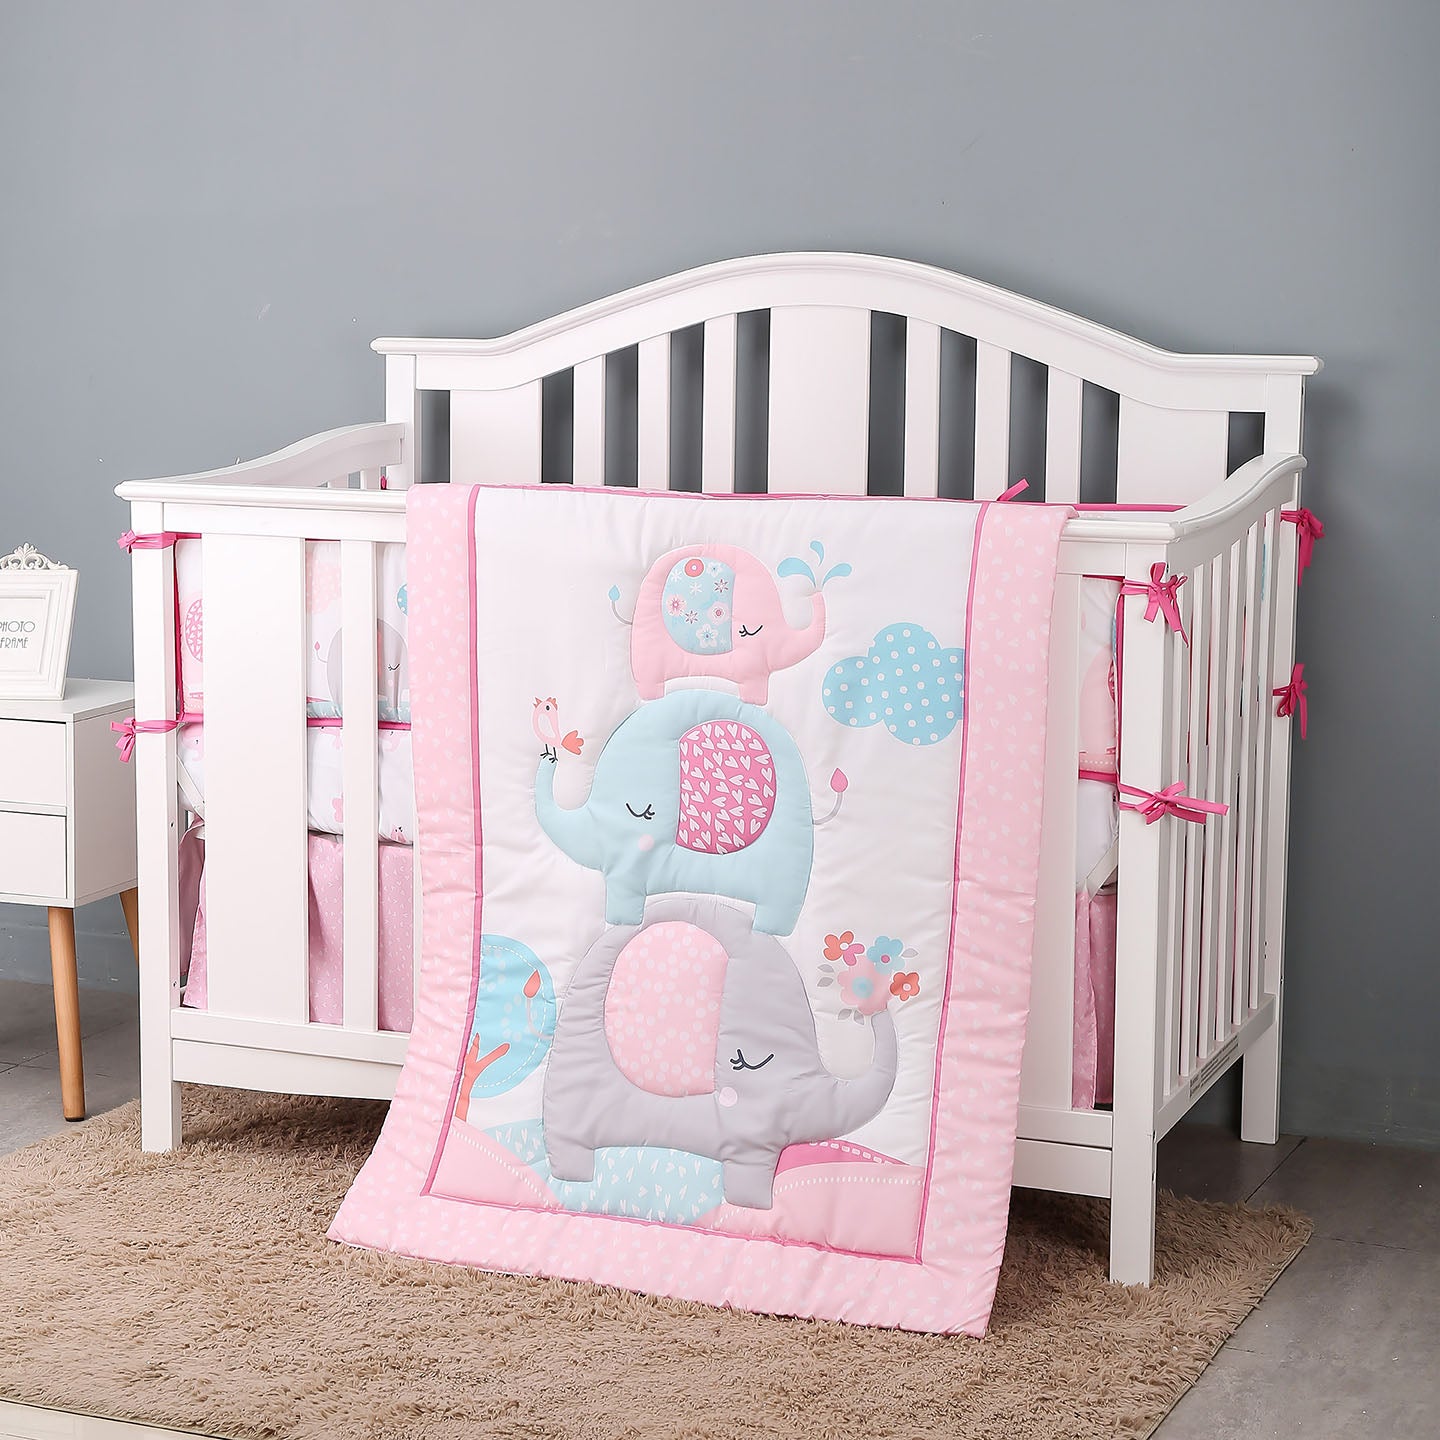 Snuggletime 3-Piece Quilt Set - Pink Elephant